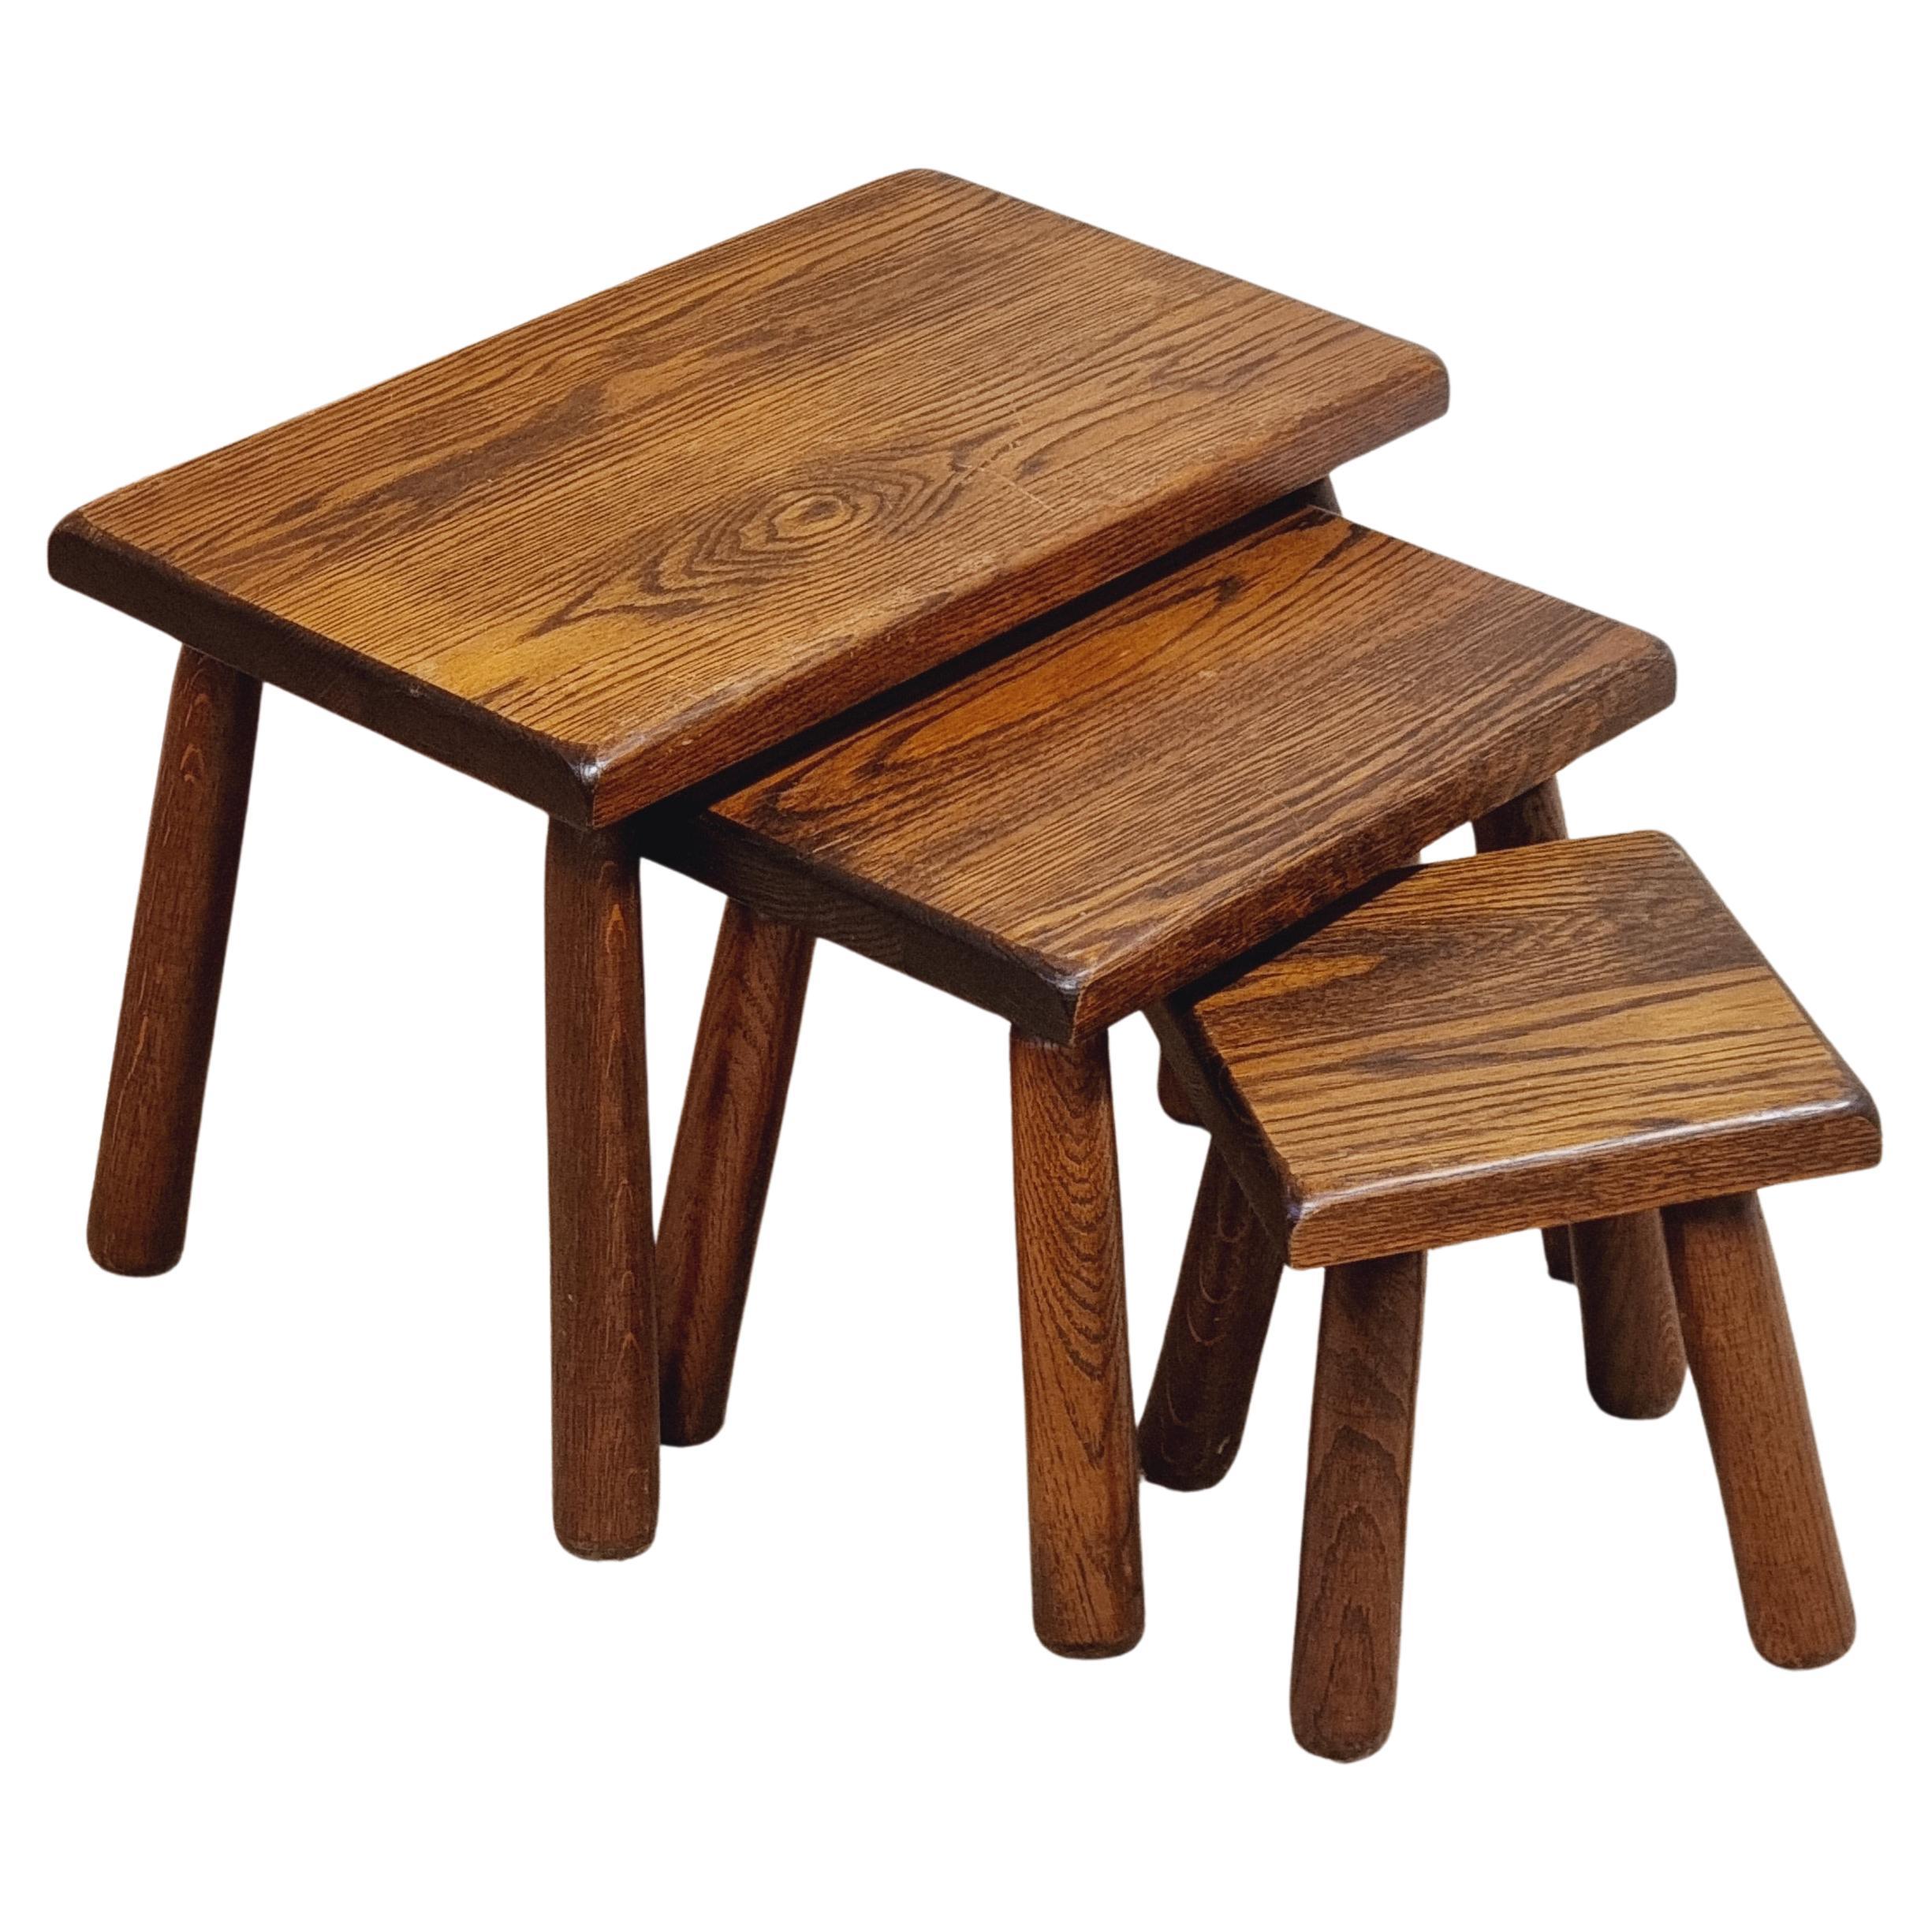 Set of Three Rustic Nesting Tables, Scandinavian / Mid-Century Modern